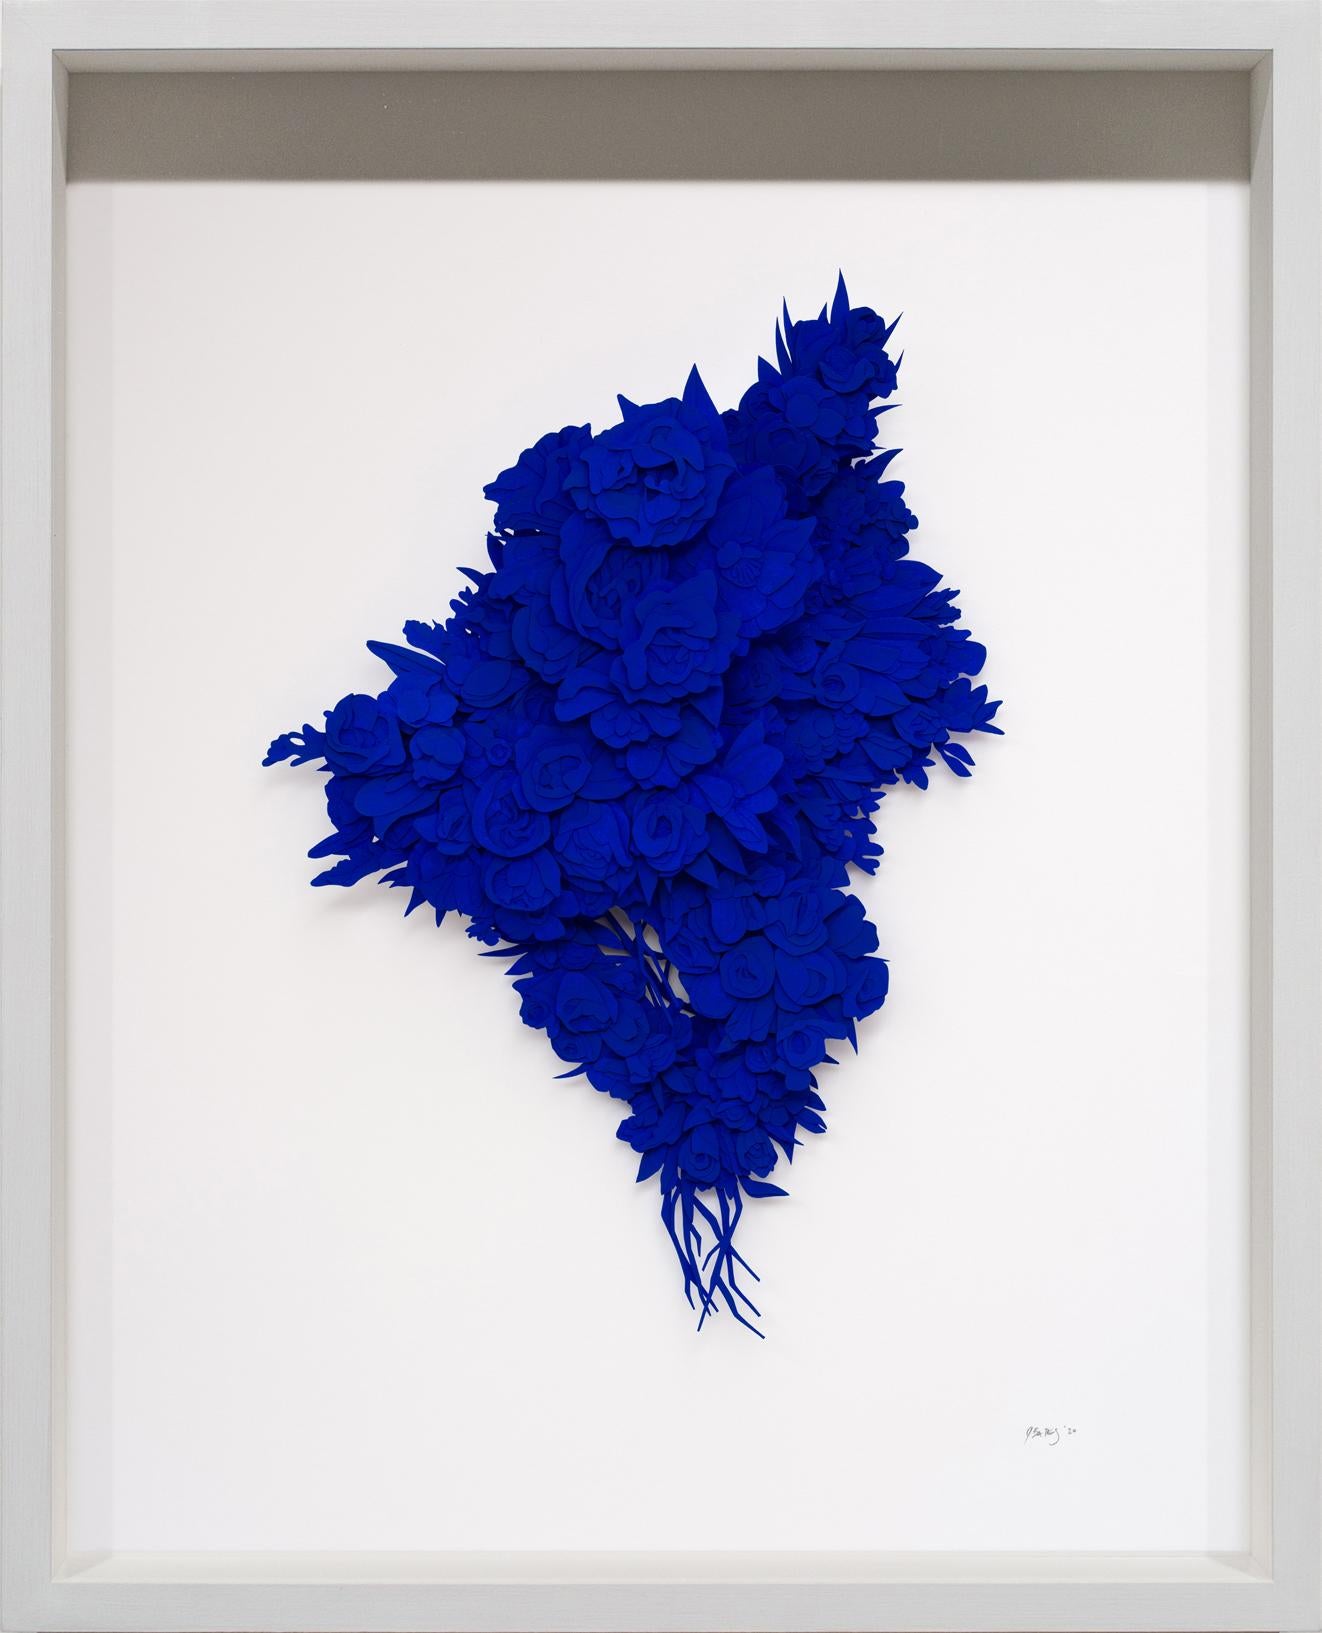 Joey Bates Still-Life Sculpture - "Explosion #11", Cobalt Blue, Cut Paper Flower Sculpture, Floral Artwork